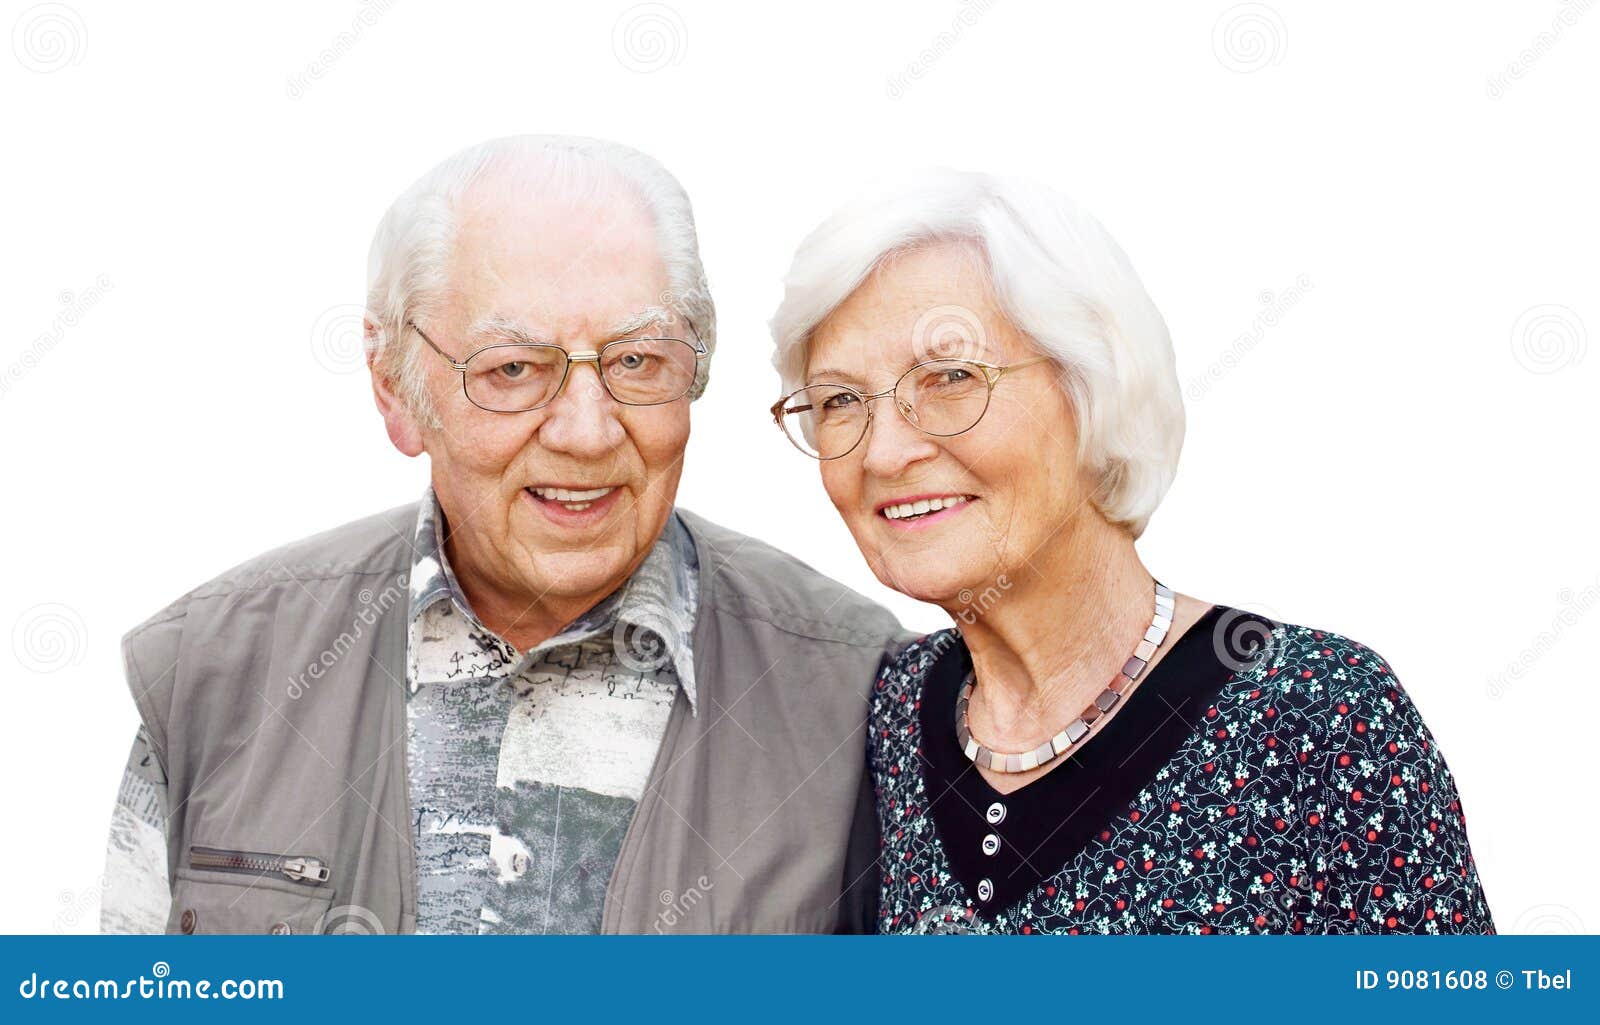 senior couple with eyeglasses